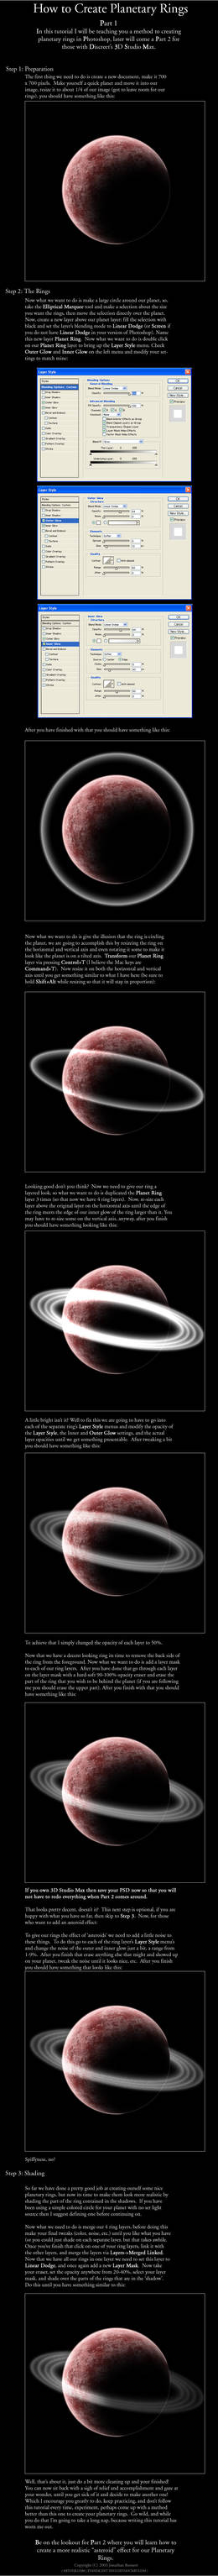 How to Create Planetary Rings